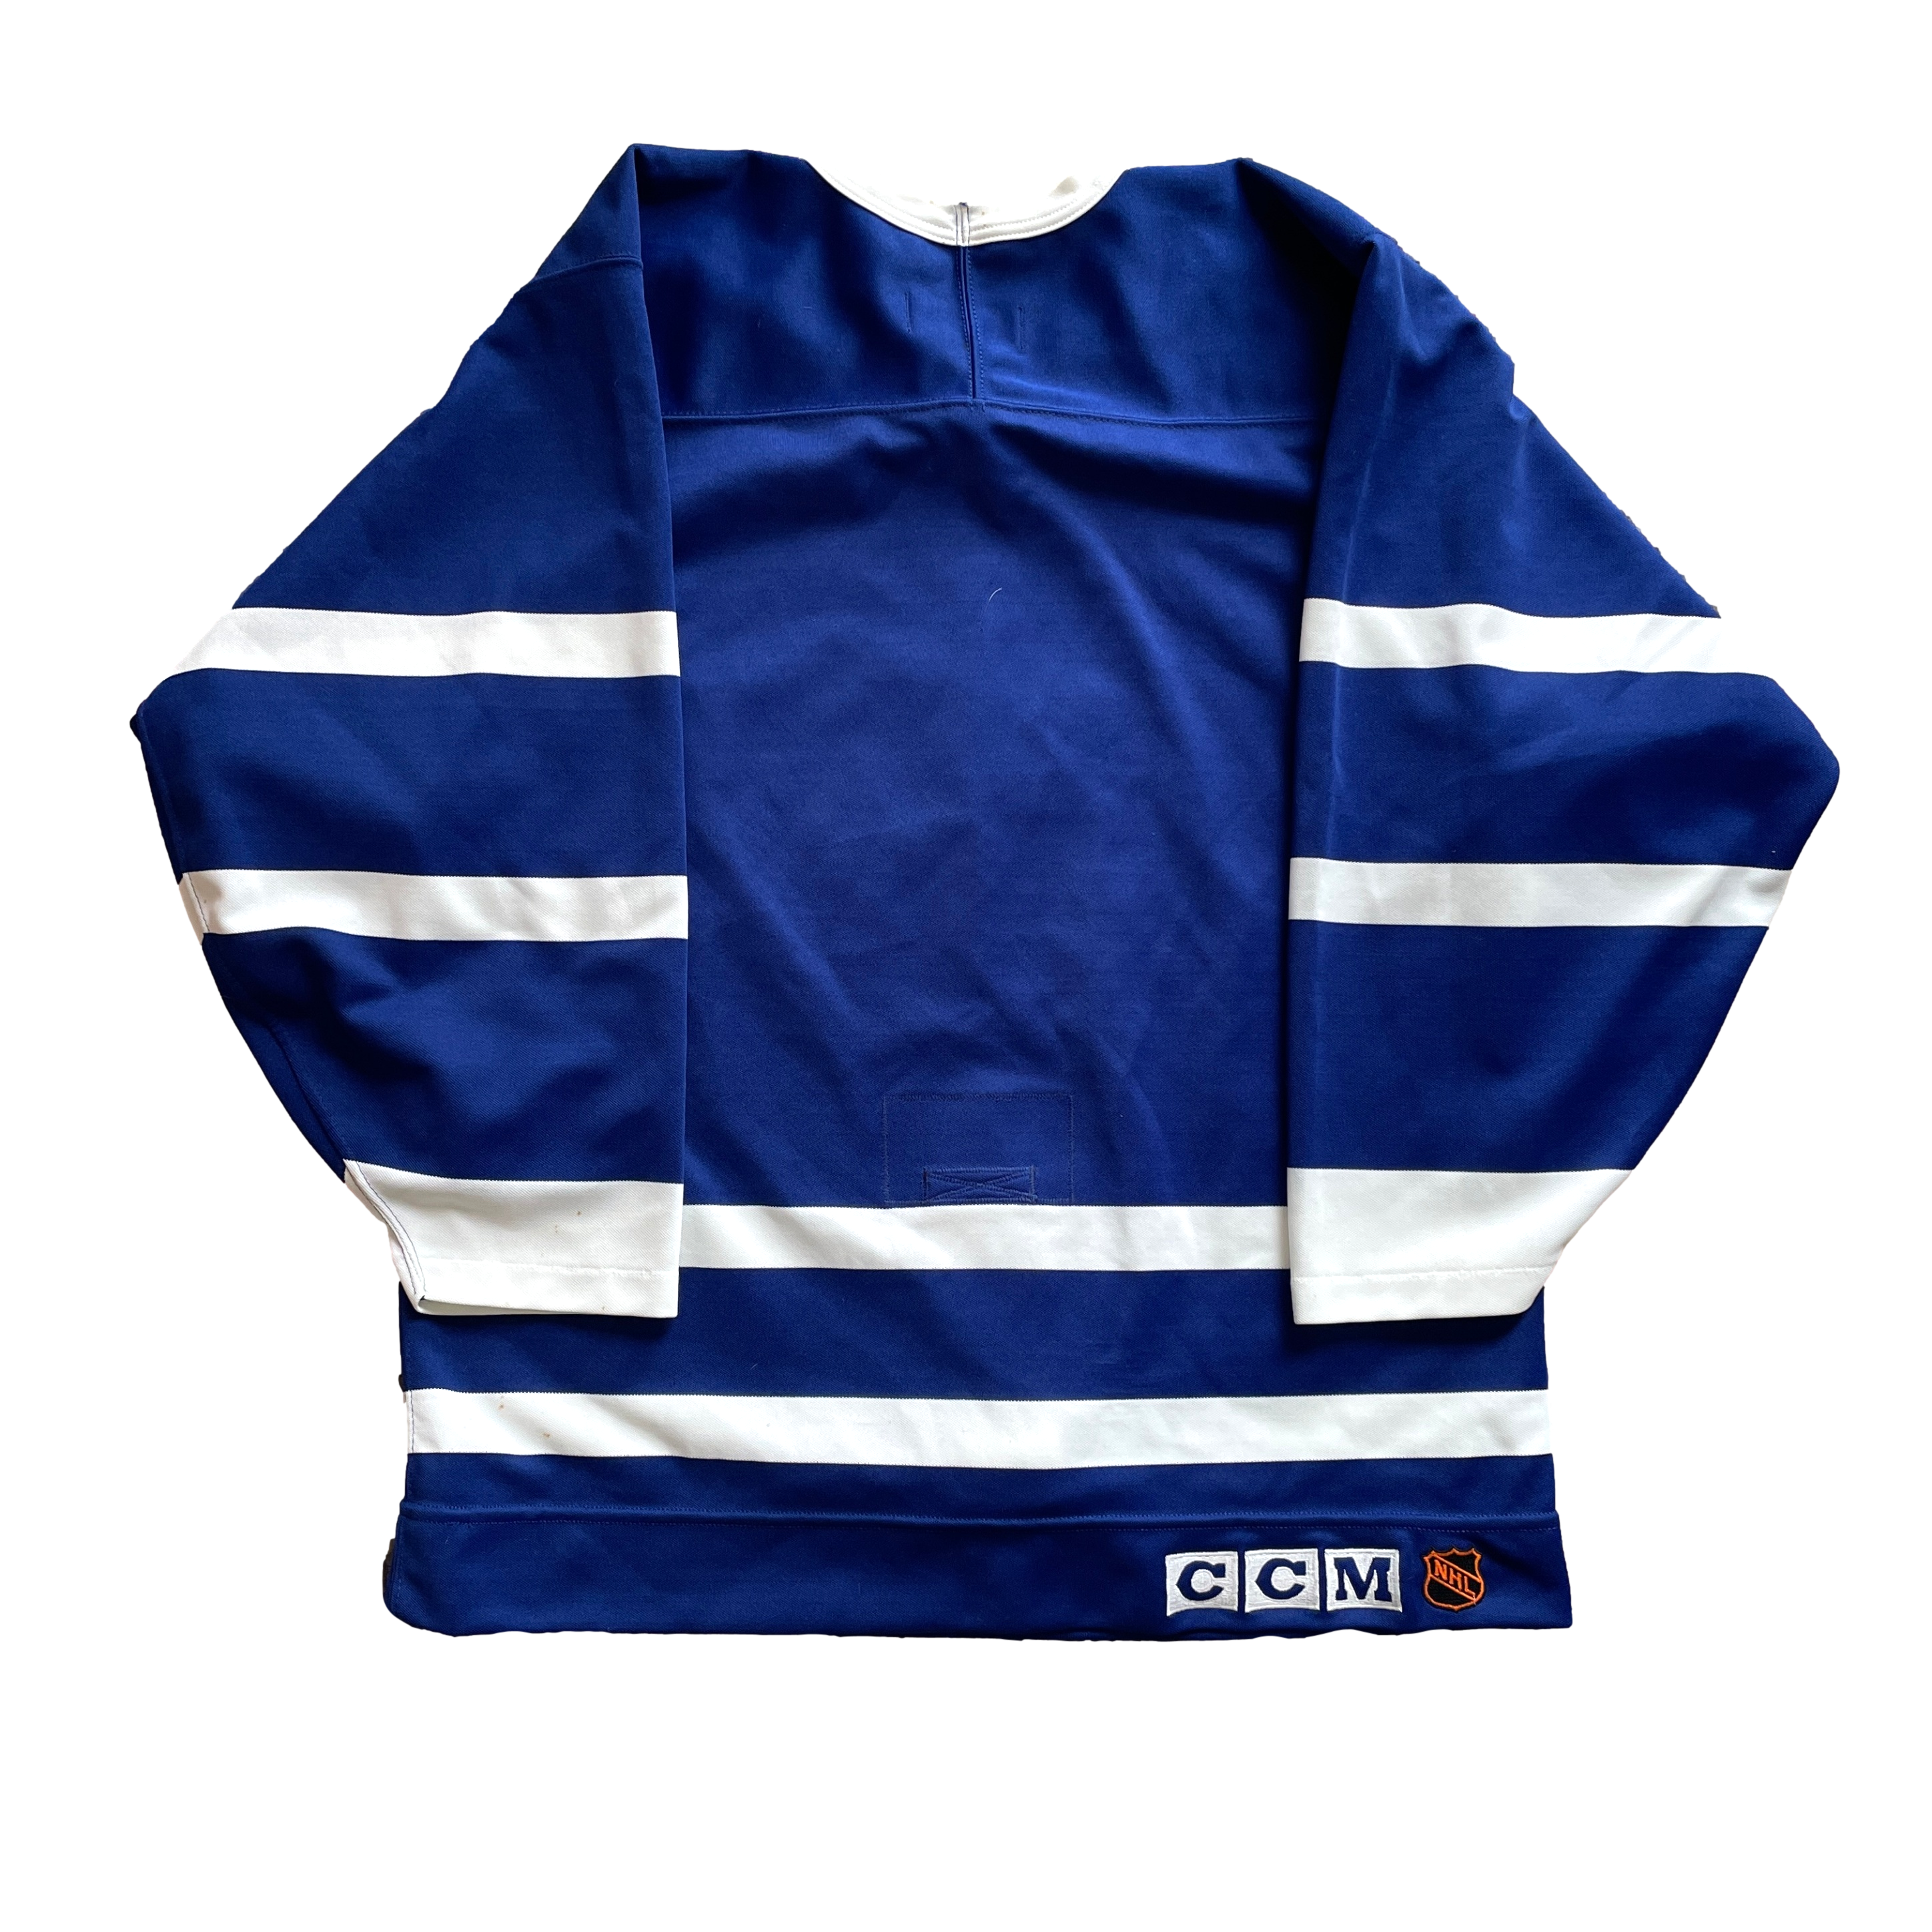 Vintage Toronto Maple Leafs NHL Hockey Jersey (44)